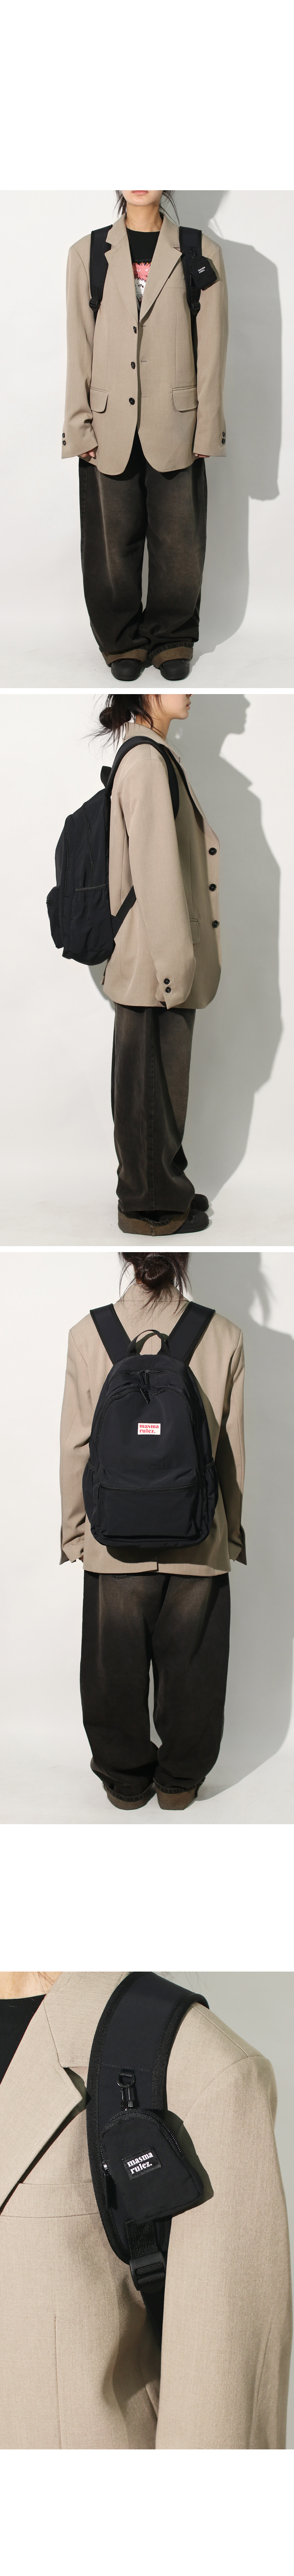 Layered backpack _ black 68,850원 - 마스마룰즈 패션잡화, 여성가방, 백팩, 패브릭 바보사랑 Layered backpack _ black 68,850원 - 마스마룰즈 패션잡화, 여성가방, 백팩, 패브릭 바보사랑